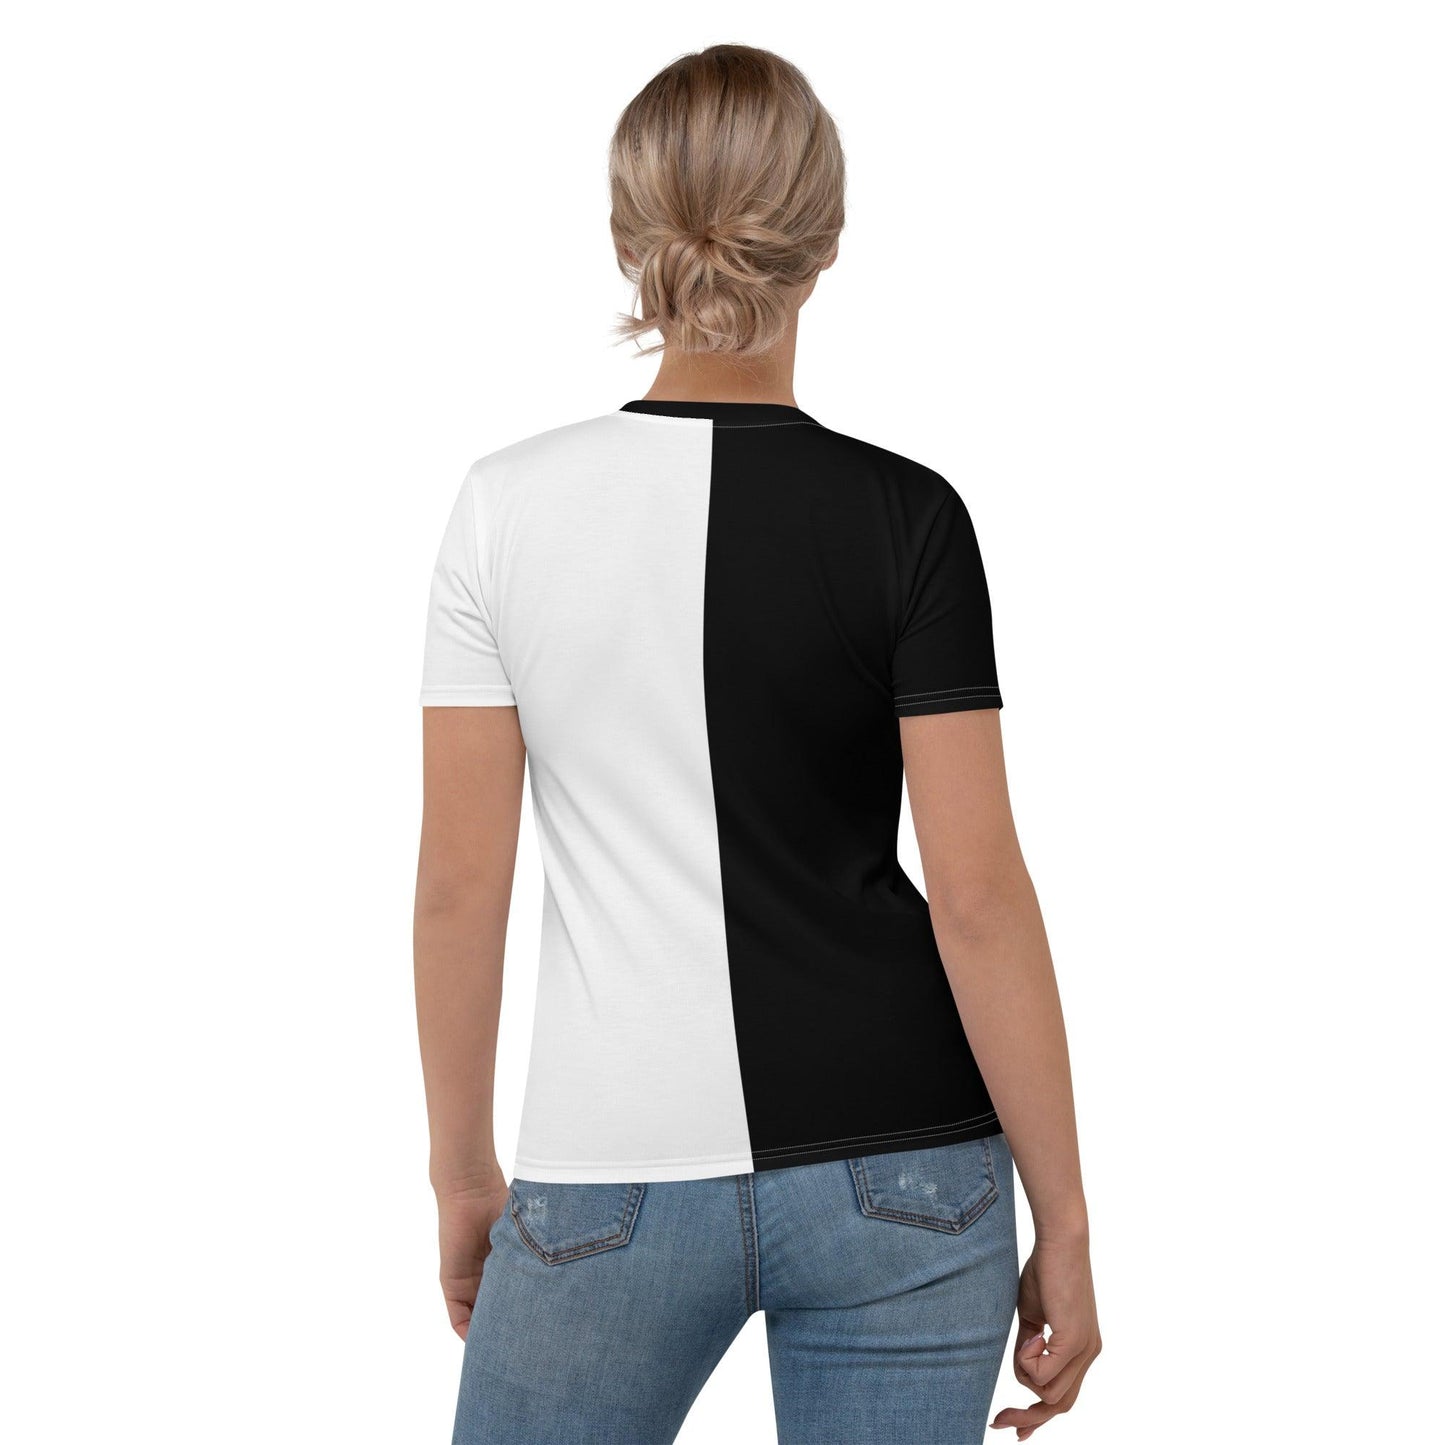 Half Black Half White - Womens T-Shirt - iSAW Company